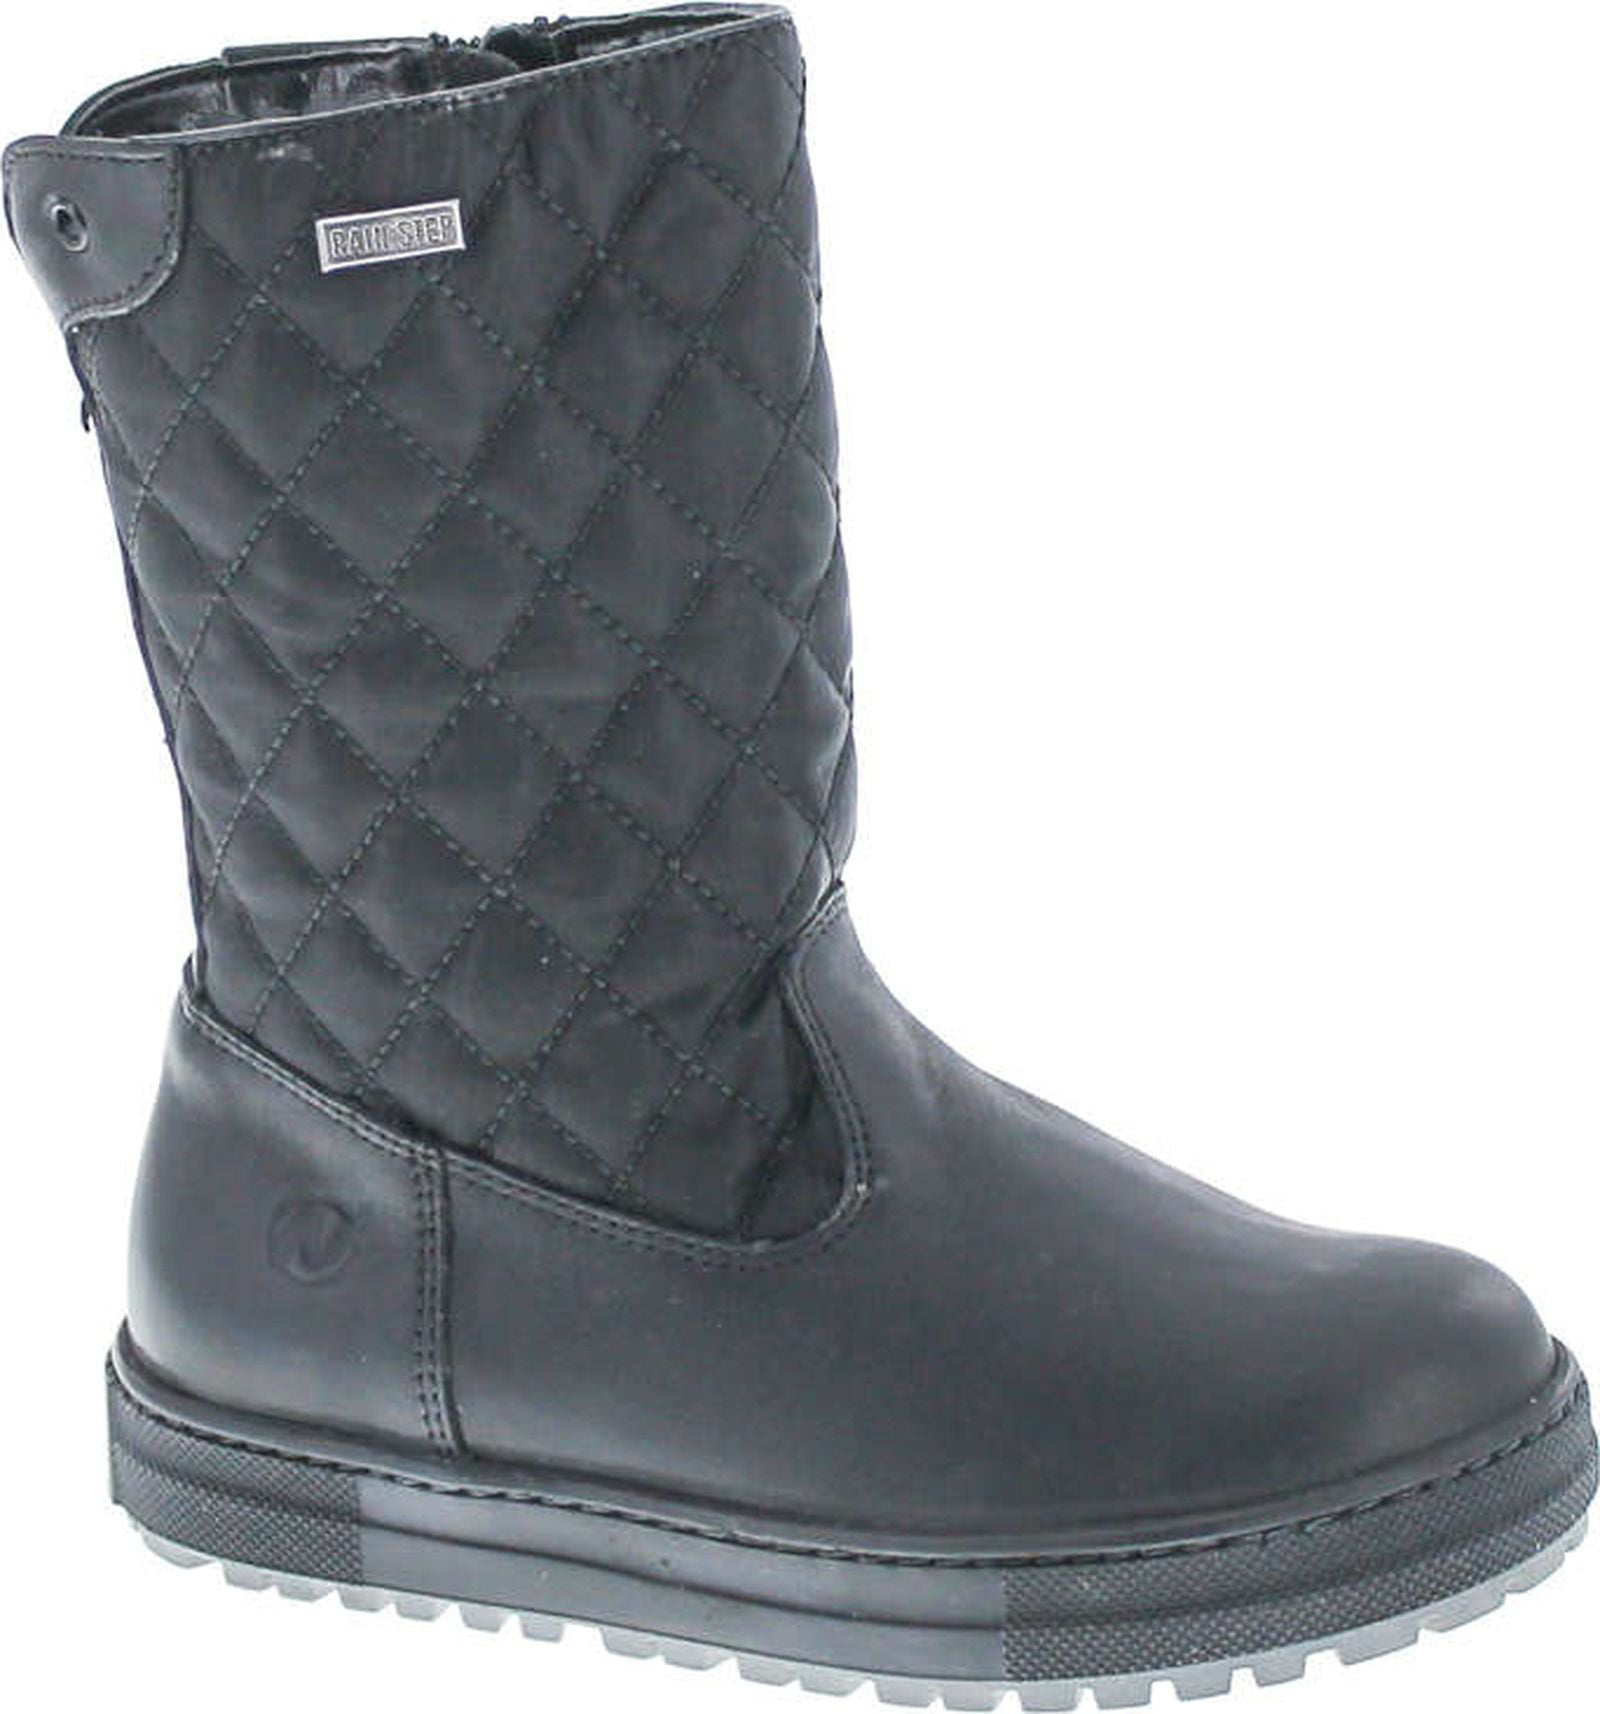 Naturino Girls Gora Rain Step Waterproof Fashion Winter Boots